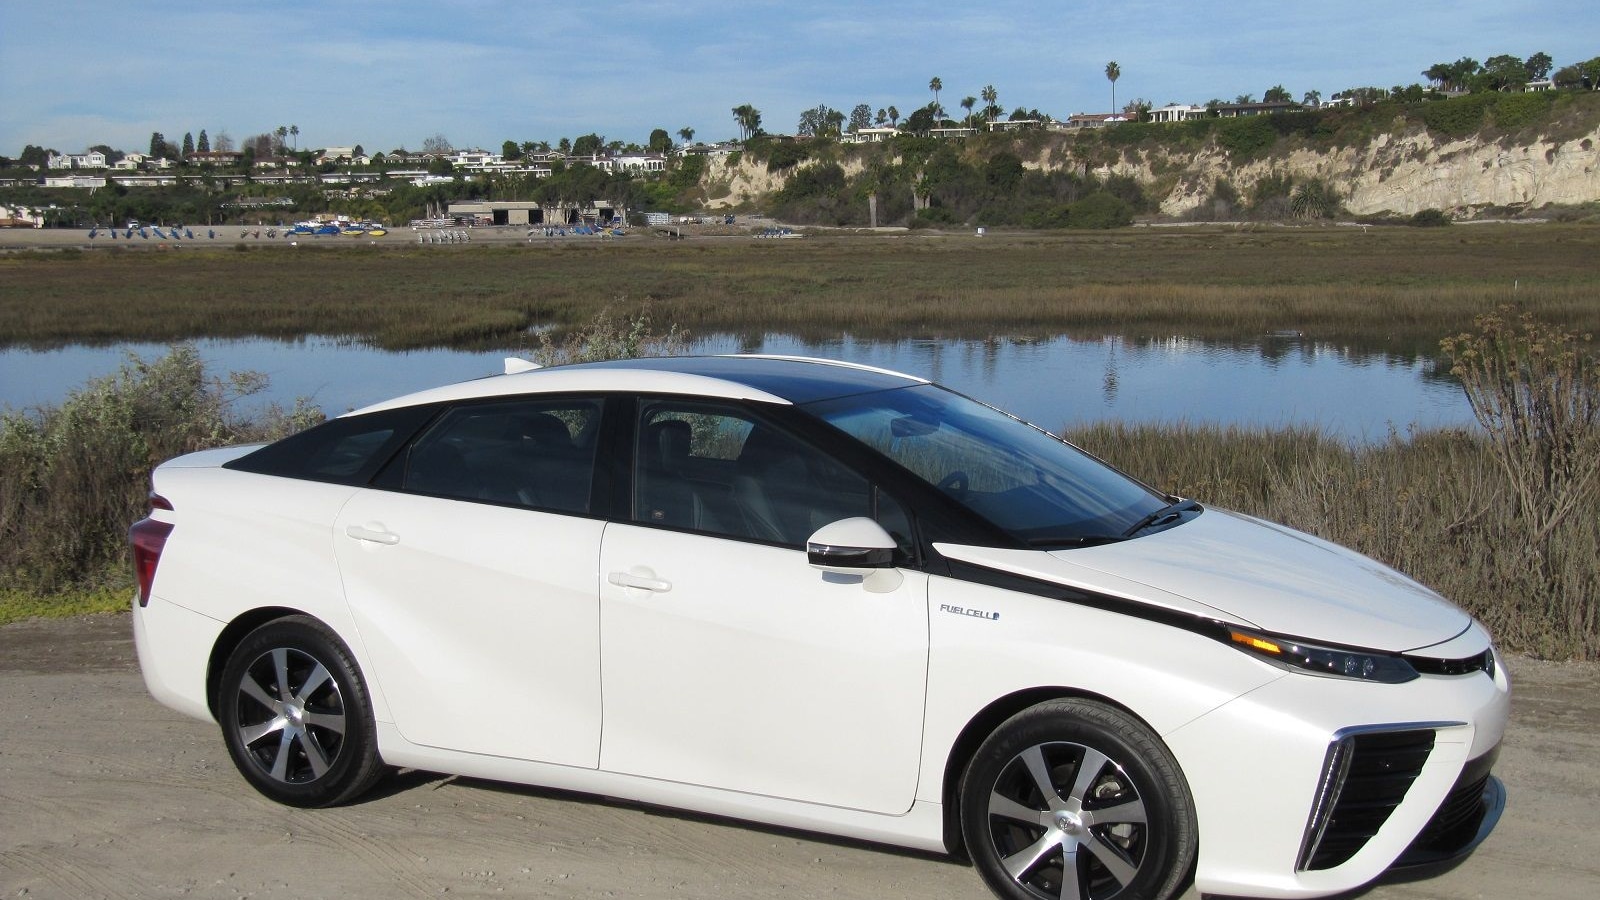 2016 Toyota Mirai hydrogen fuel-cell car, Newport Beach, CA, Nov 2014